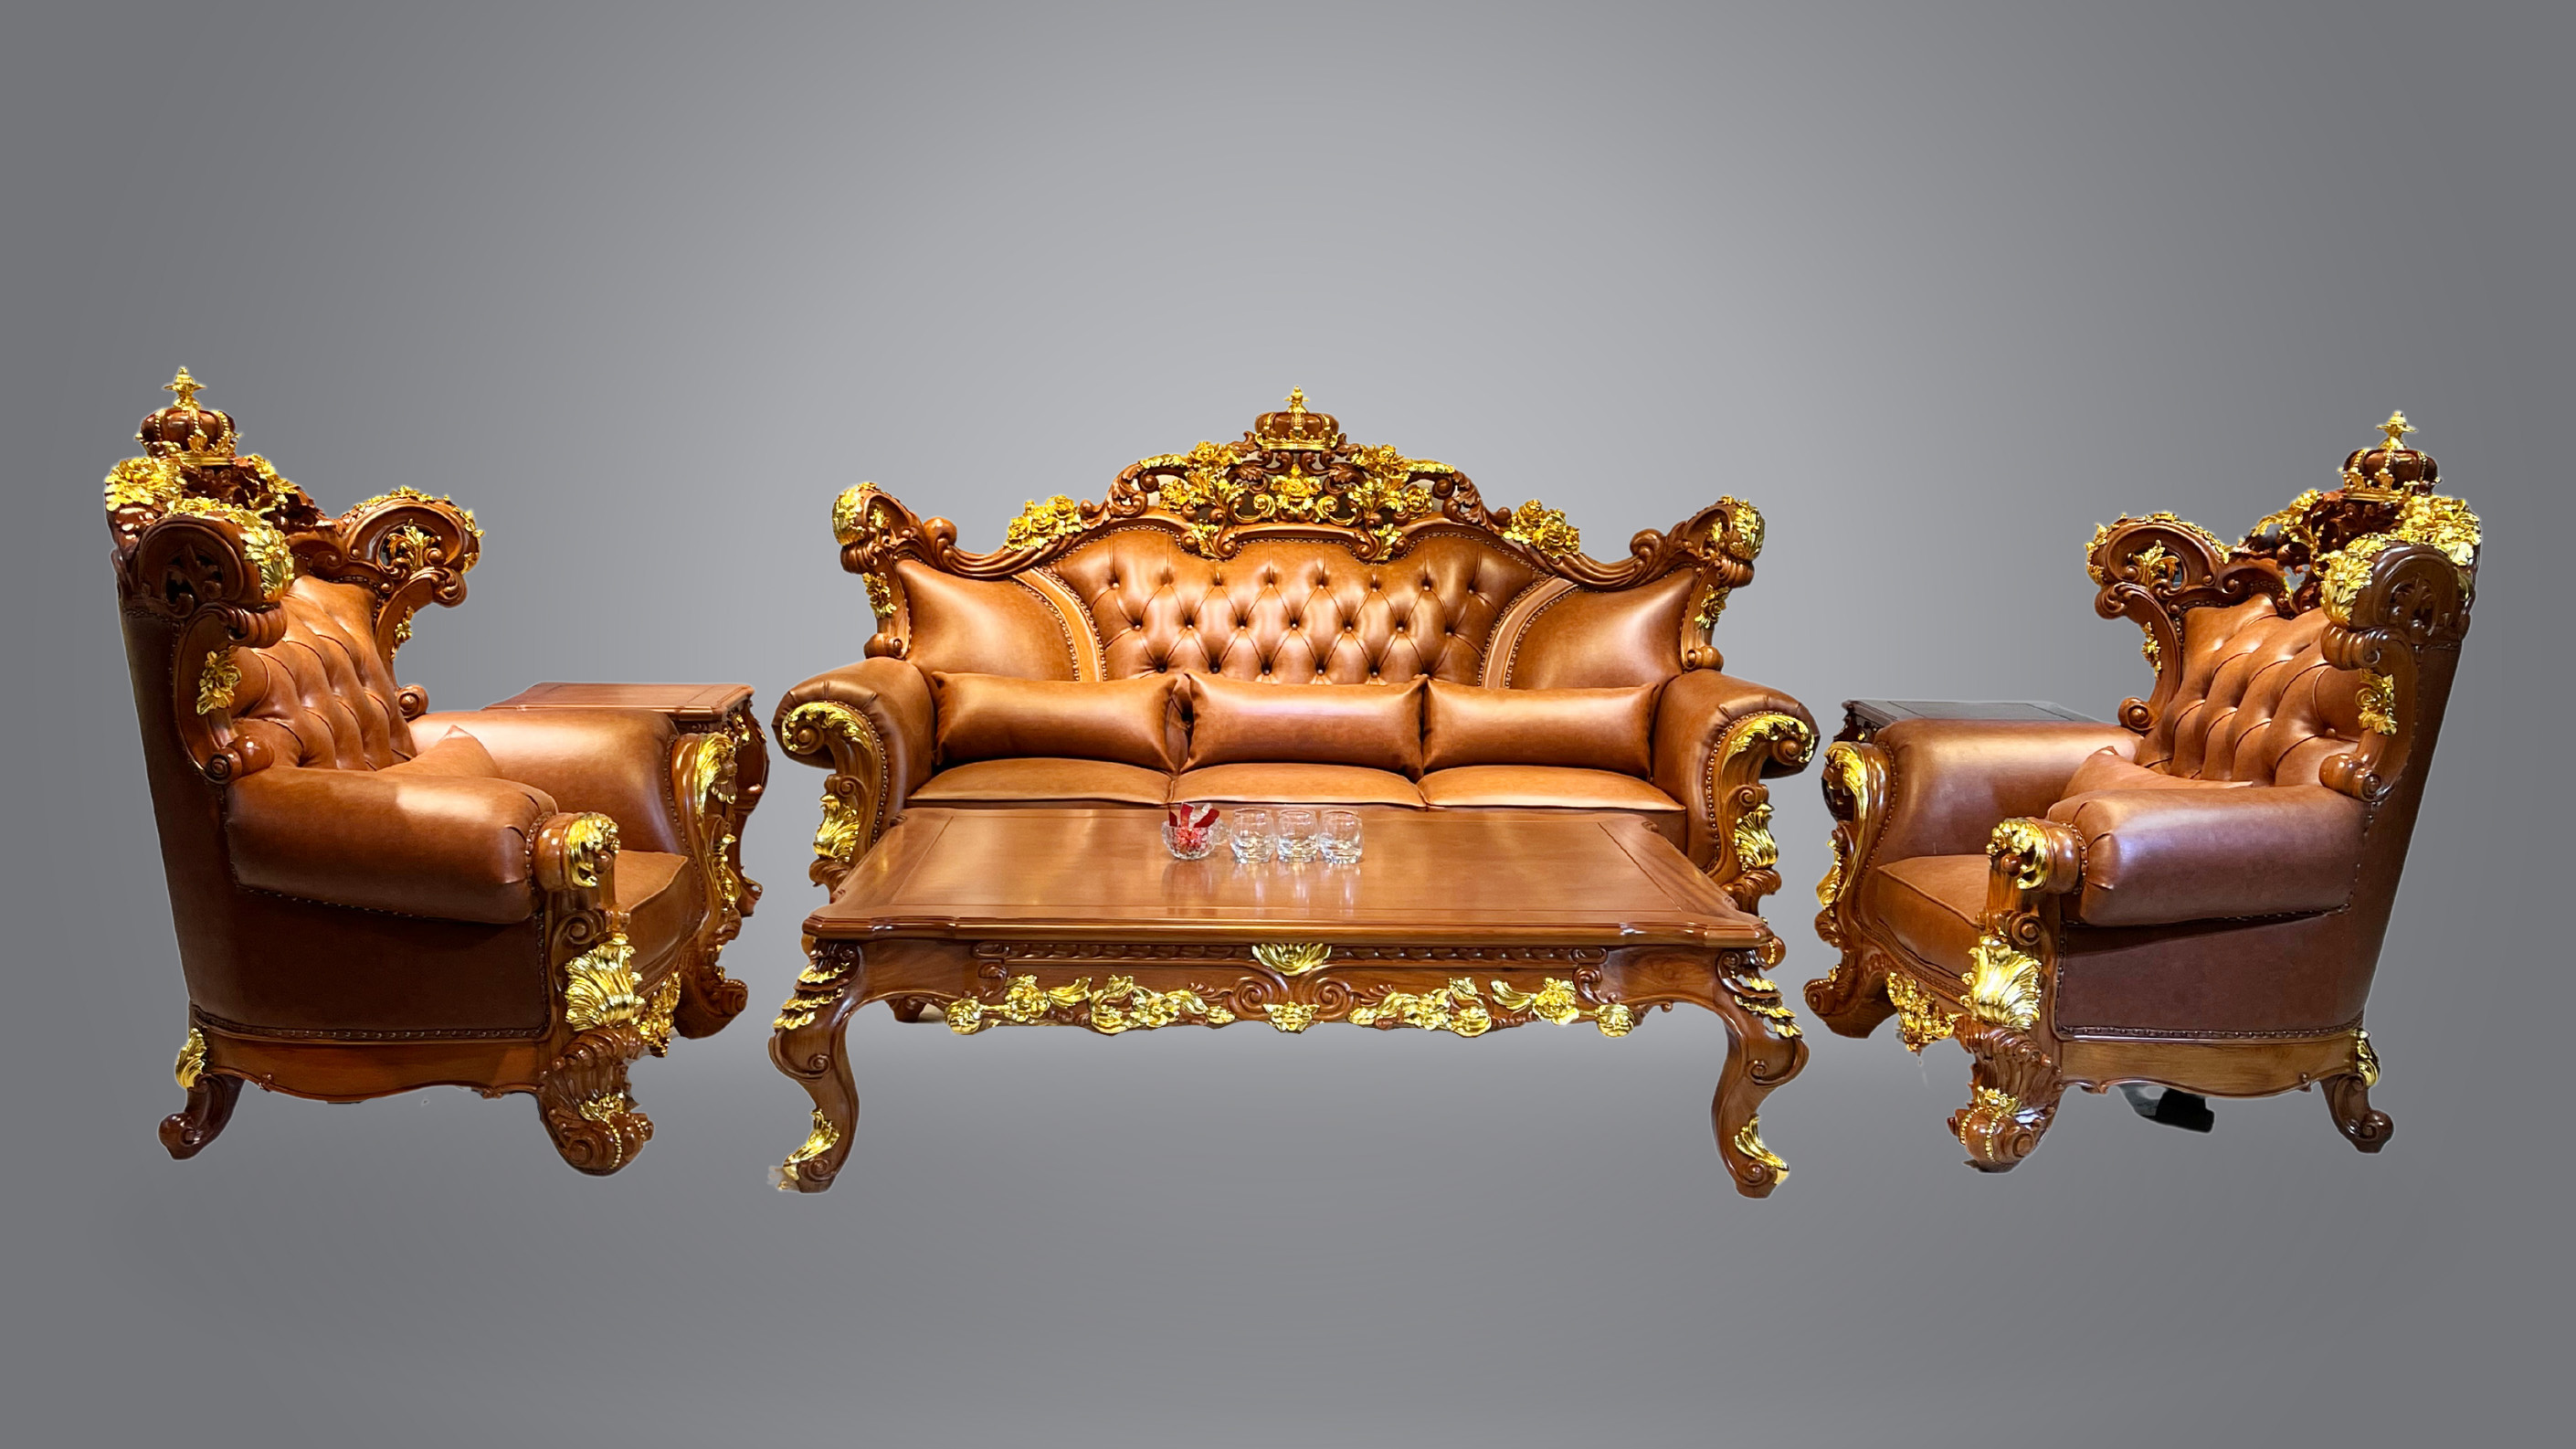 Sofa "The King"